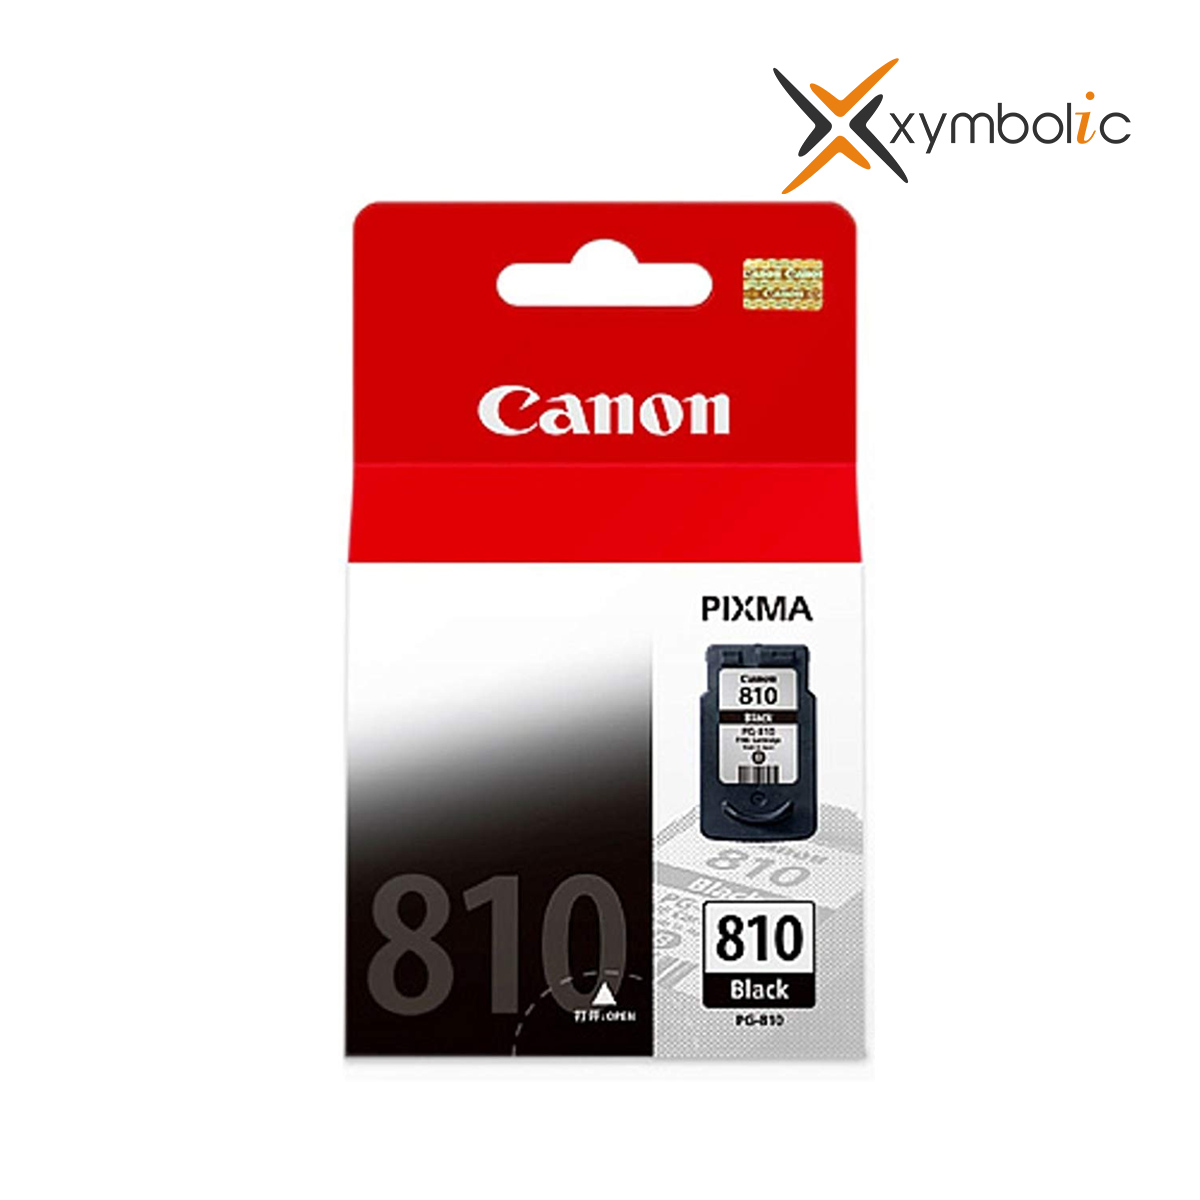 Canon Pixma Pg 810 Black Ink Cartridges Lazada Ph